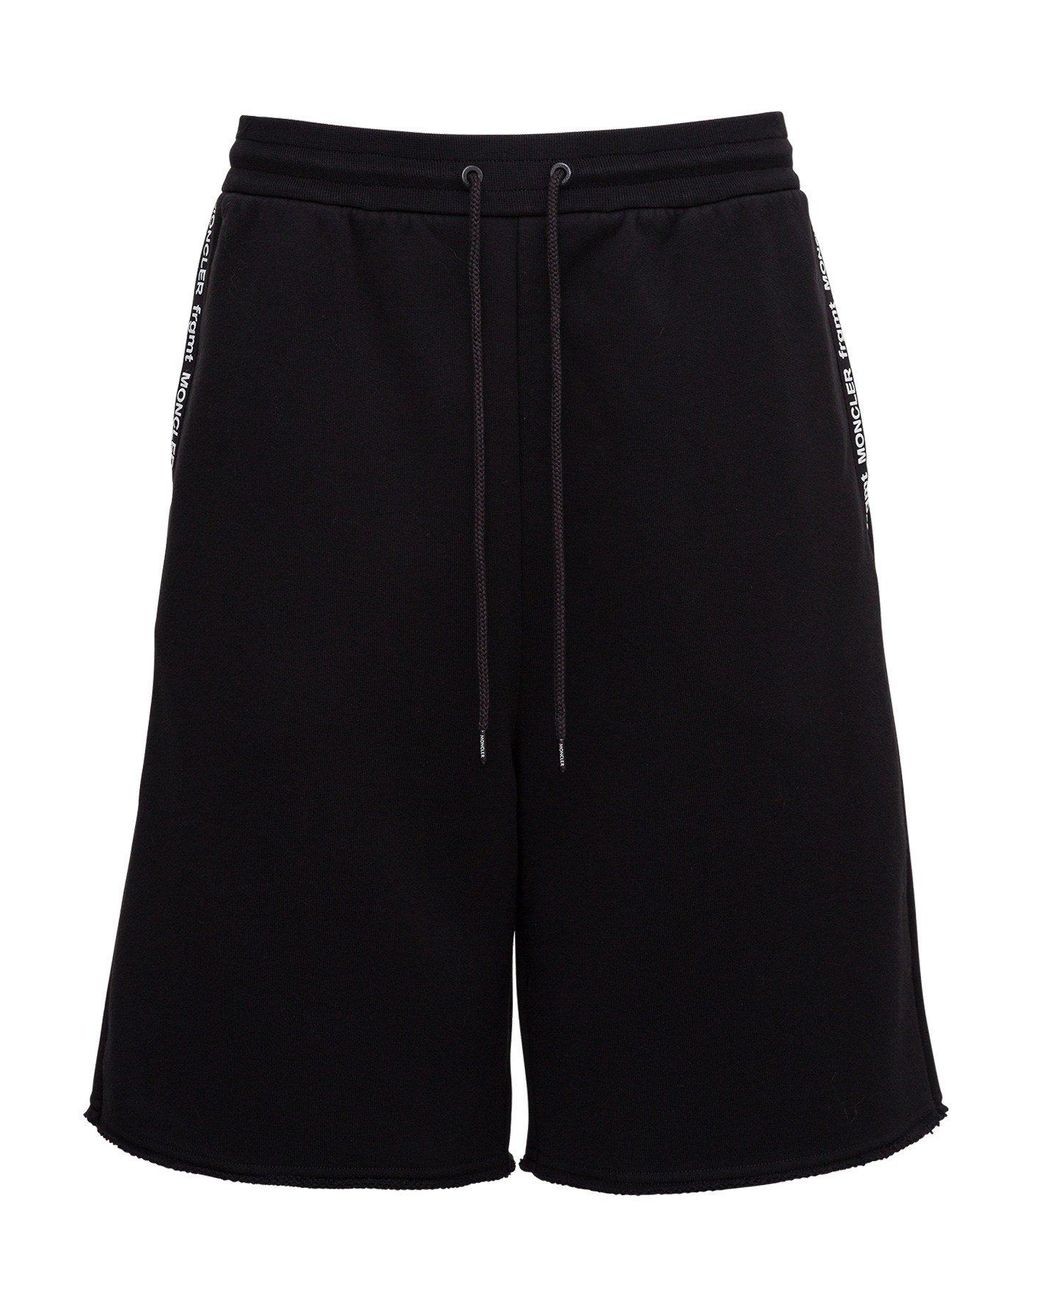 Moncler Genius Cotton Bermuda Shorts By Fragment® in Black for Men - Lyst